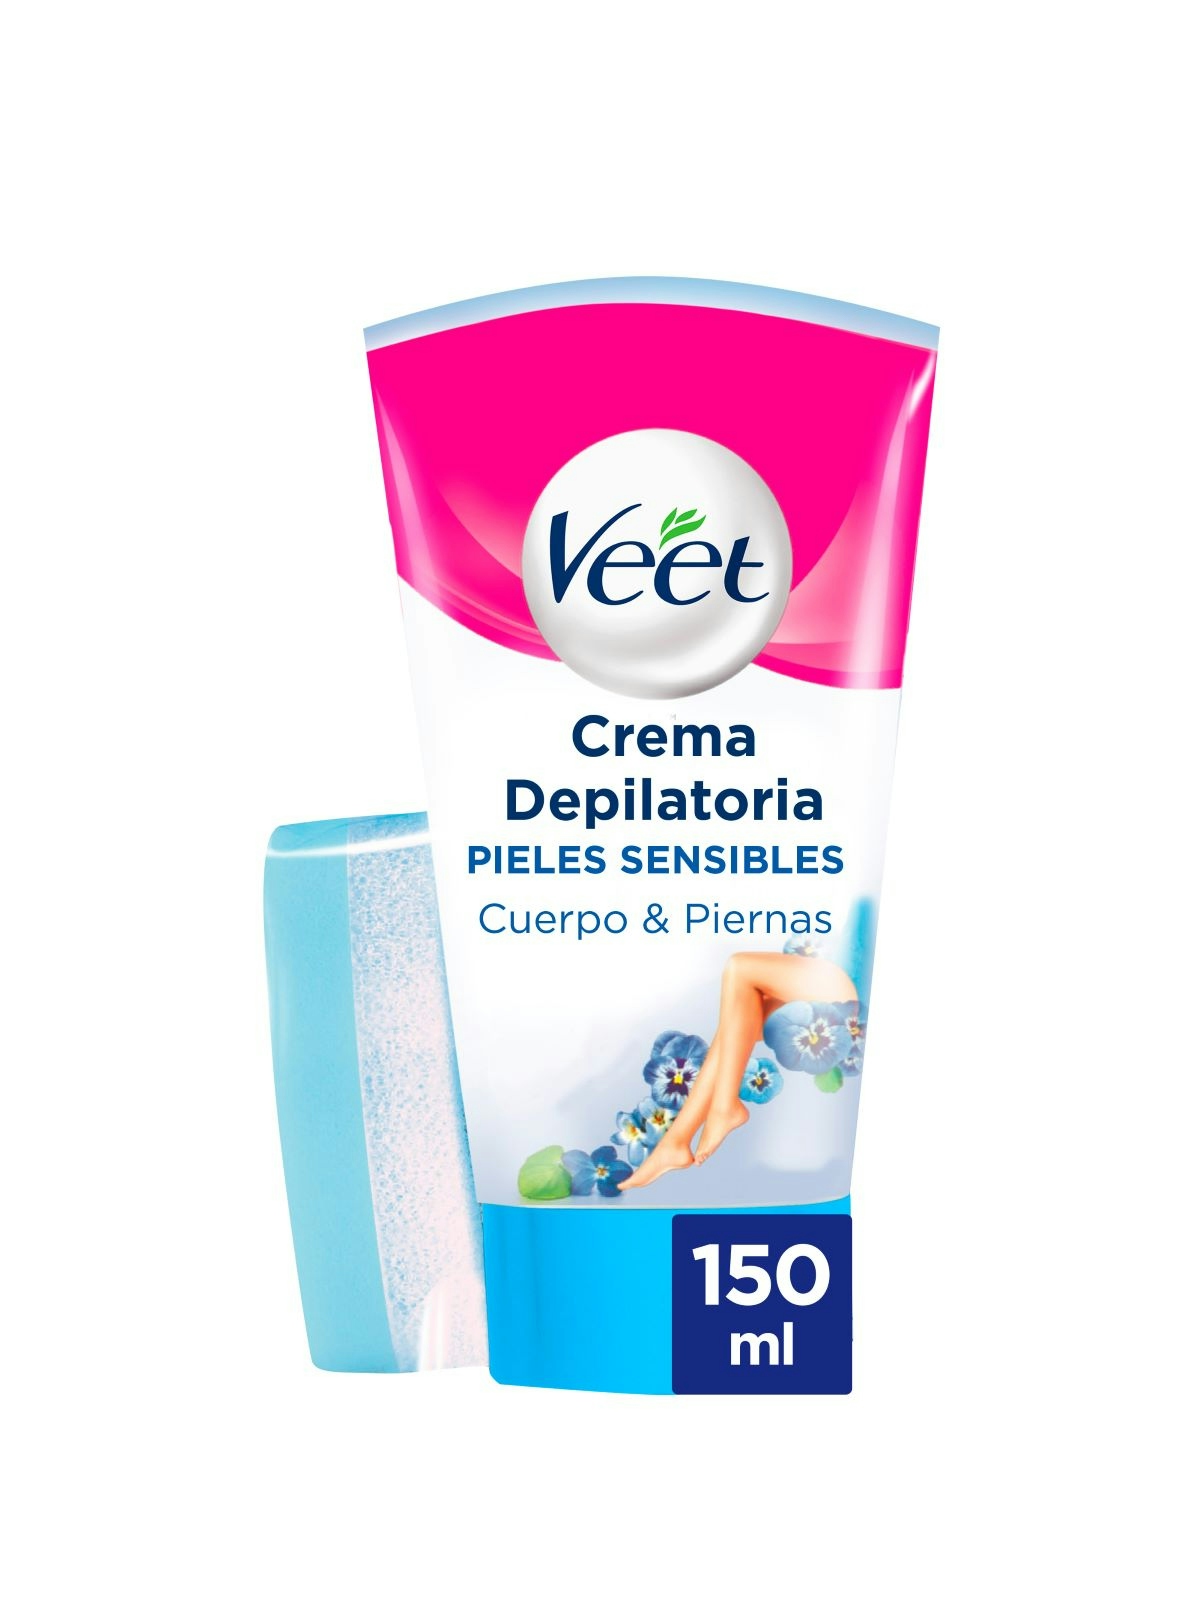 Crema depilatoria ducha piel sensible VEET 150 ml